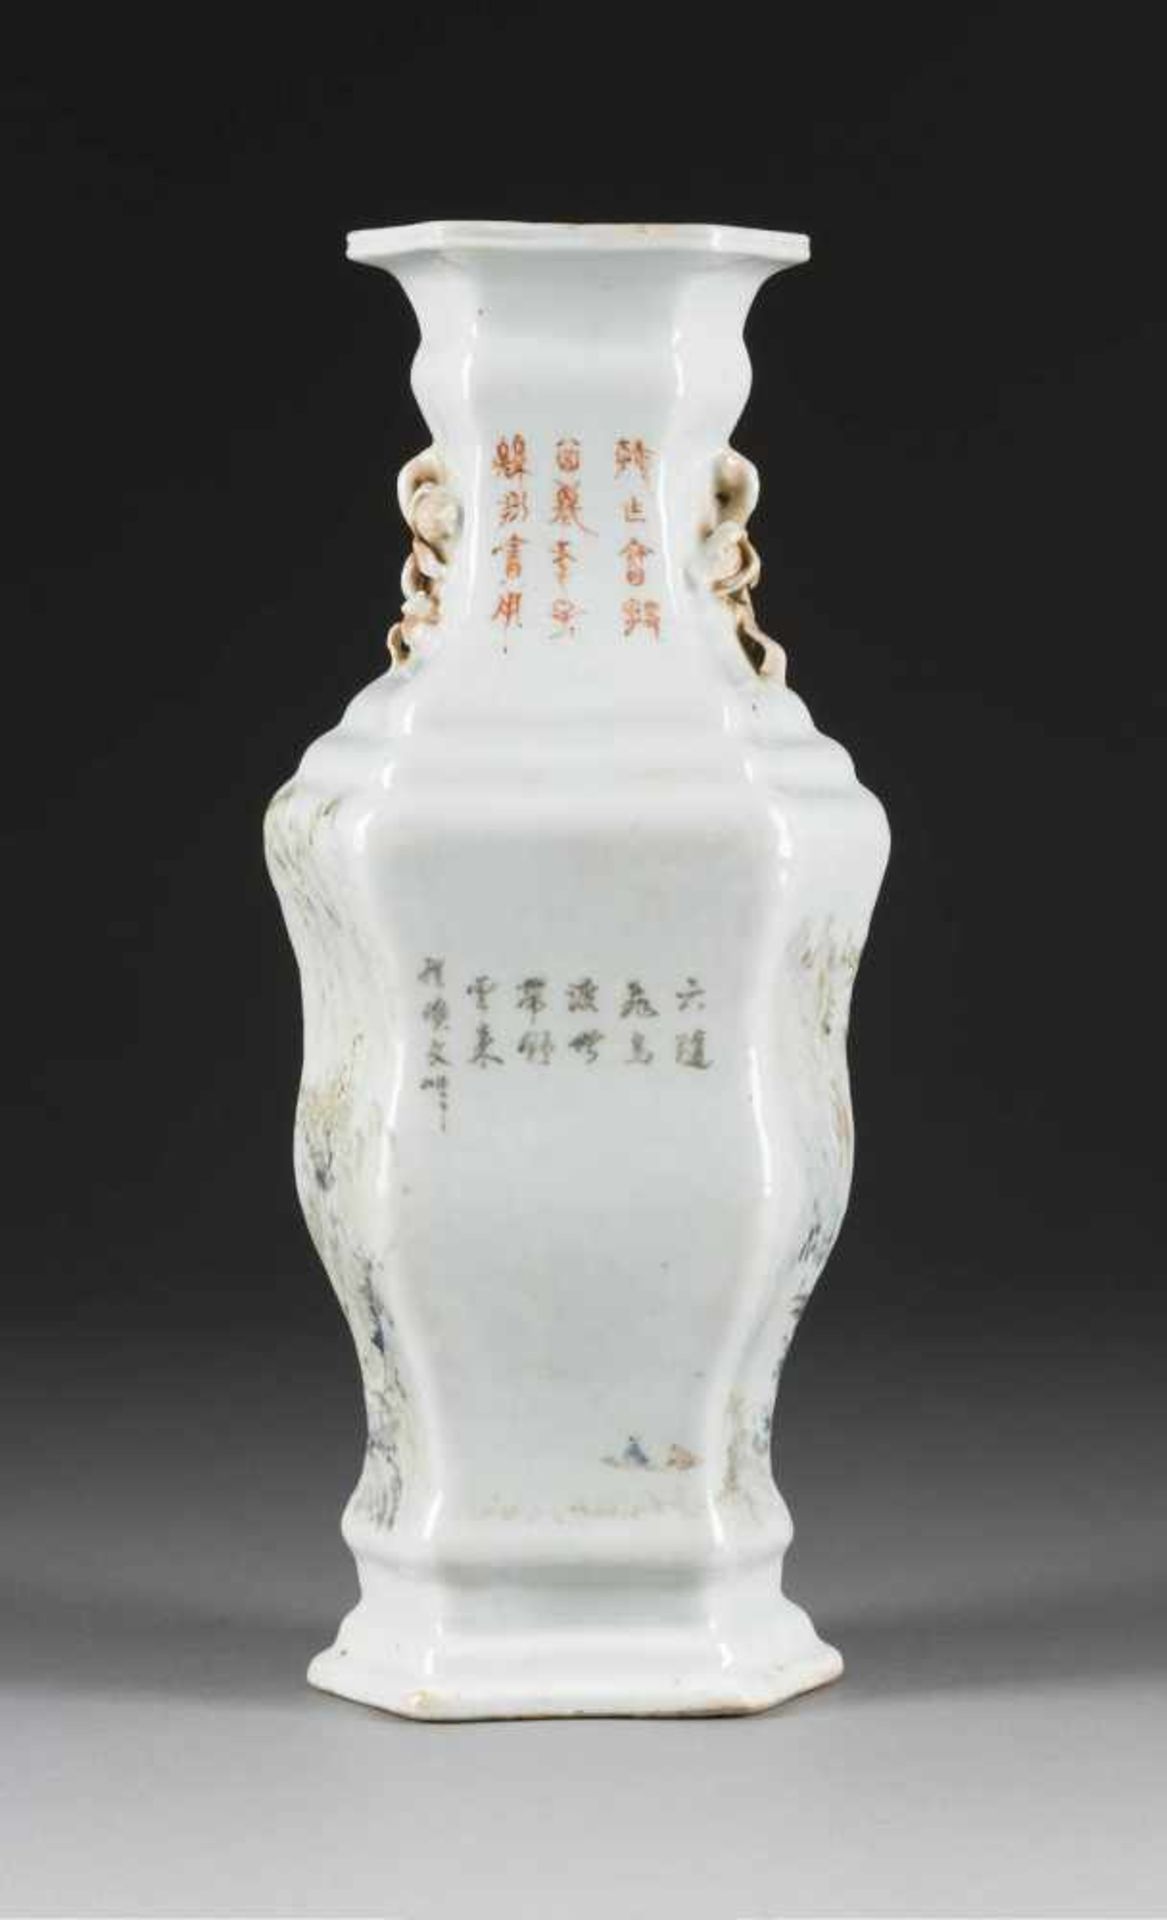 SECHSECKIGE VASE China, 19. Jh. Porzellan, polychrome Aufglasurbemalung. H. 34,3 cm. Bez. 'Cheng, - Bild 2 aus 2